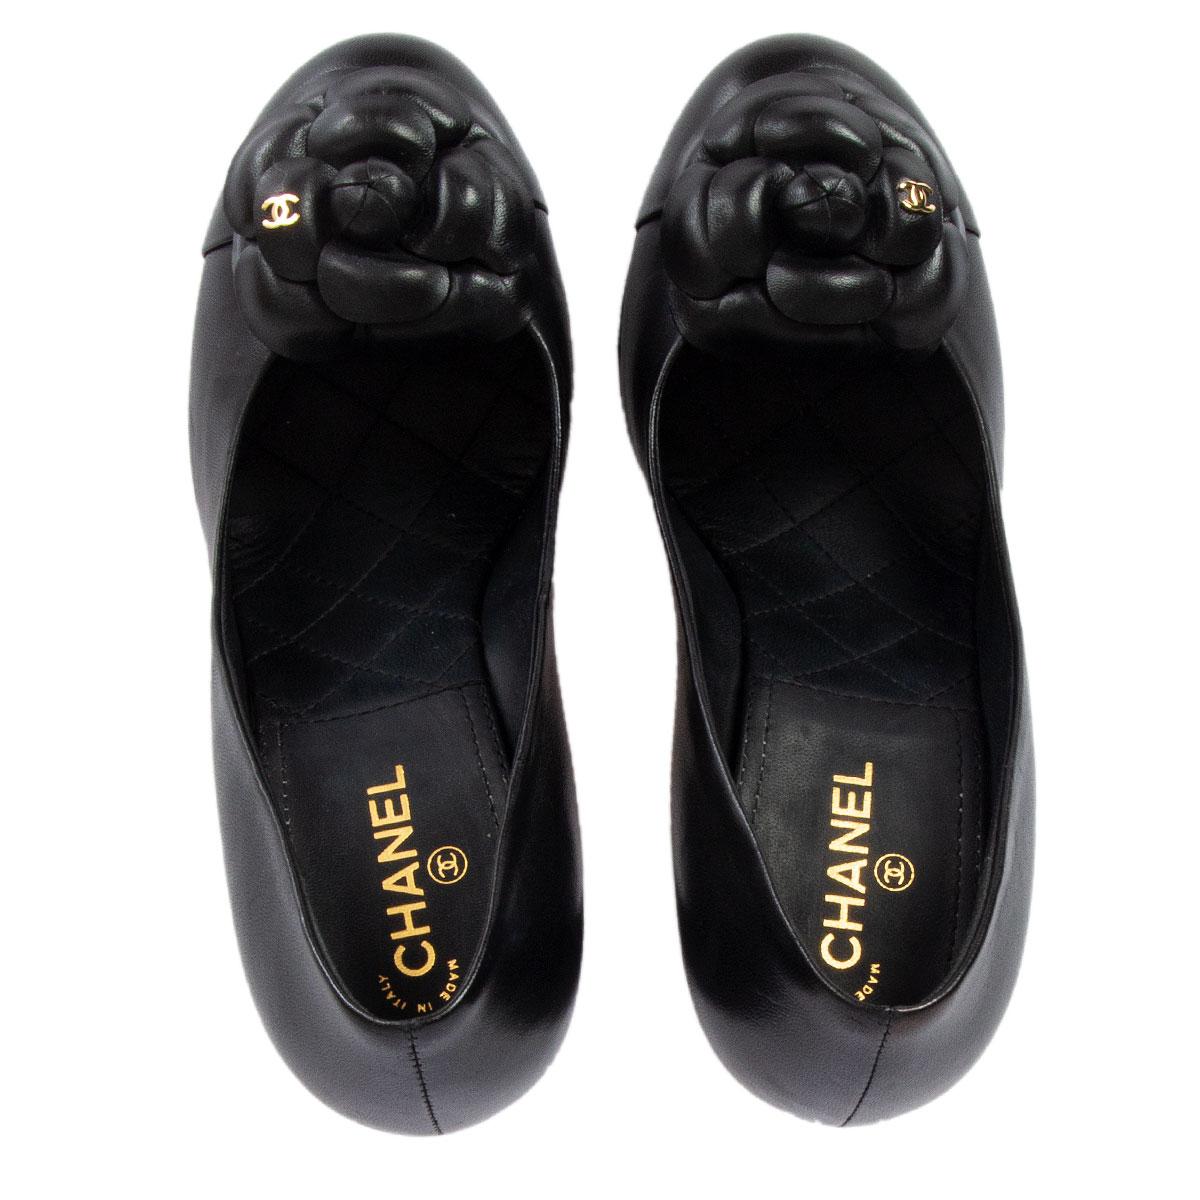 Women's CHANEL black leather CAMELIA BLOCK HEEL Pumps Shoes 38.5